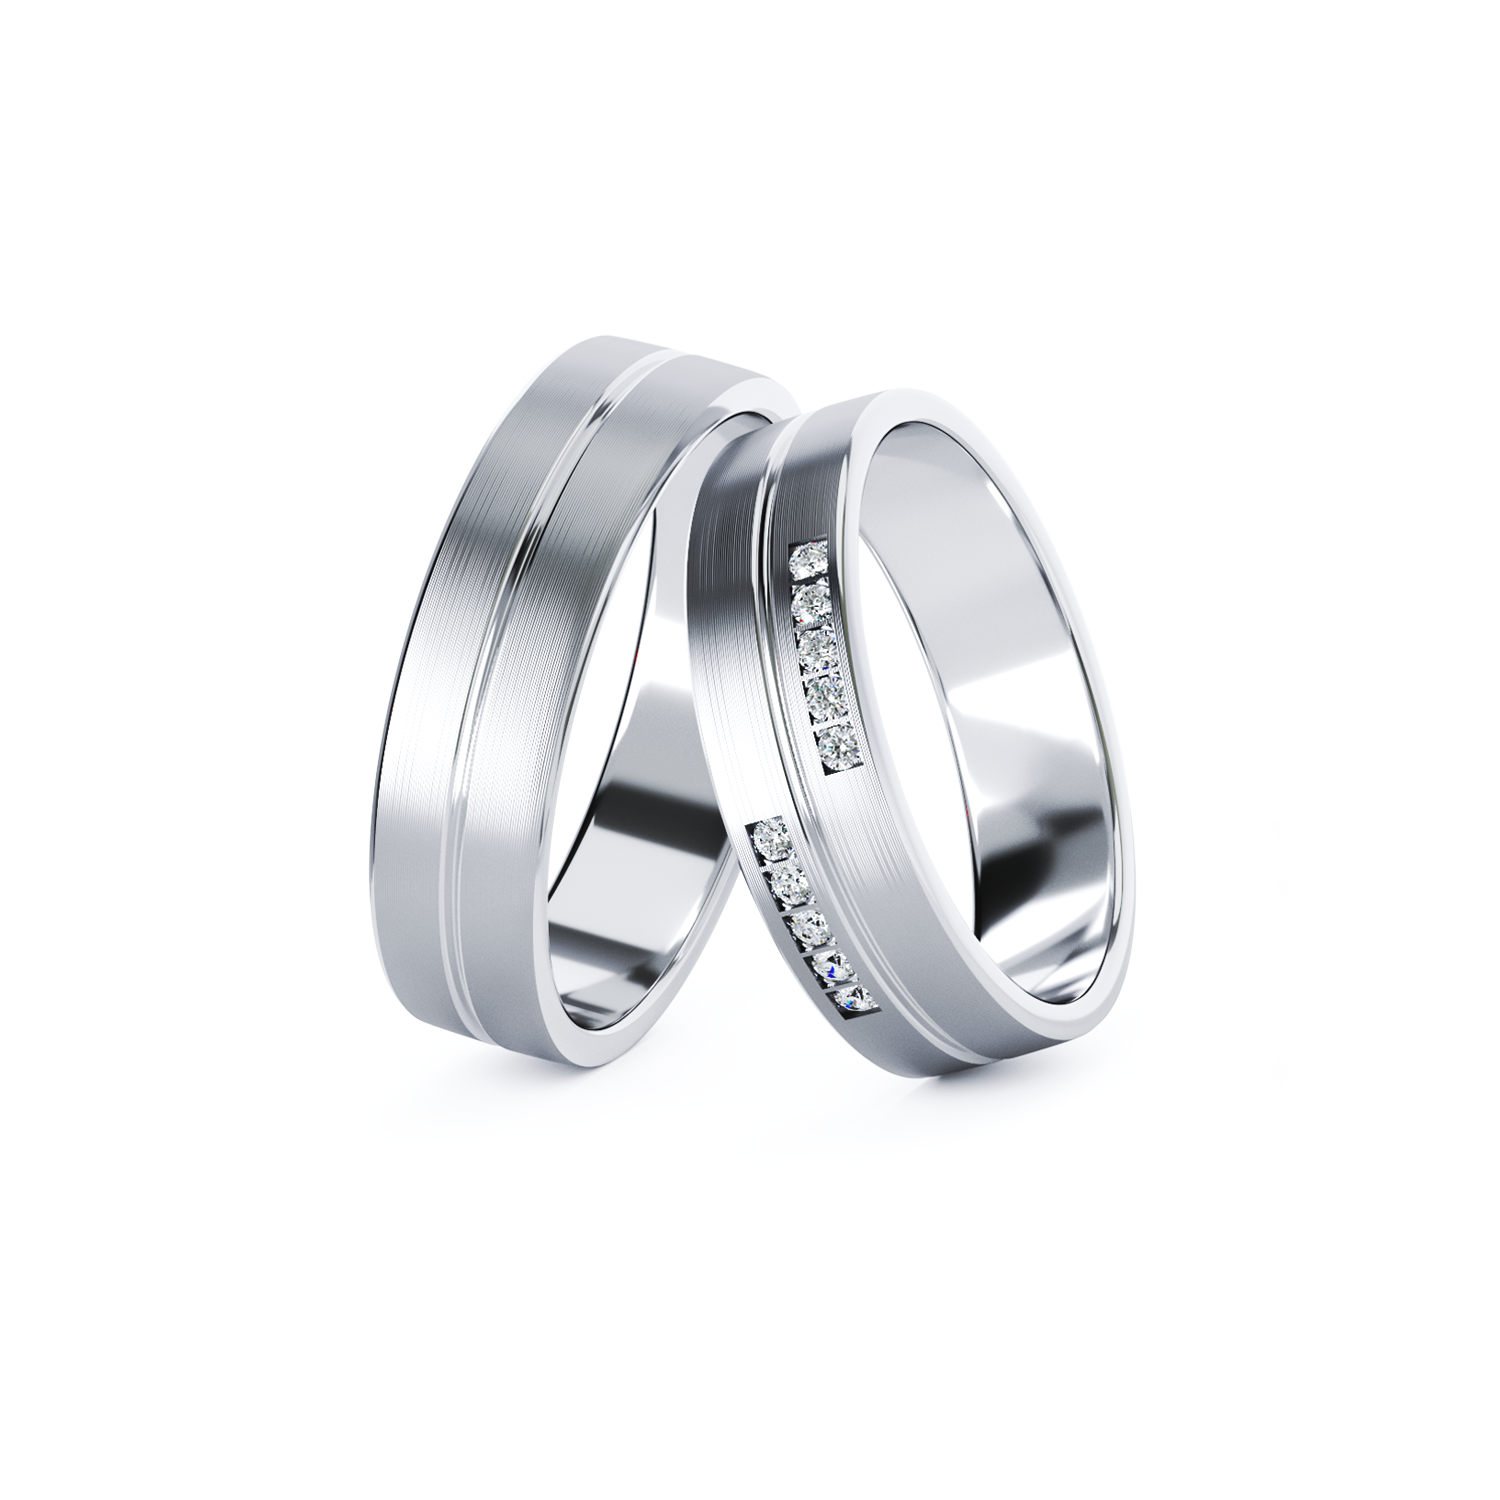 TEI-C409 gold wedding rings